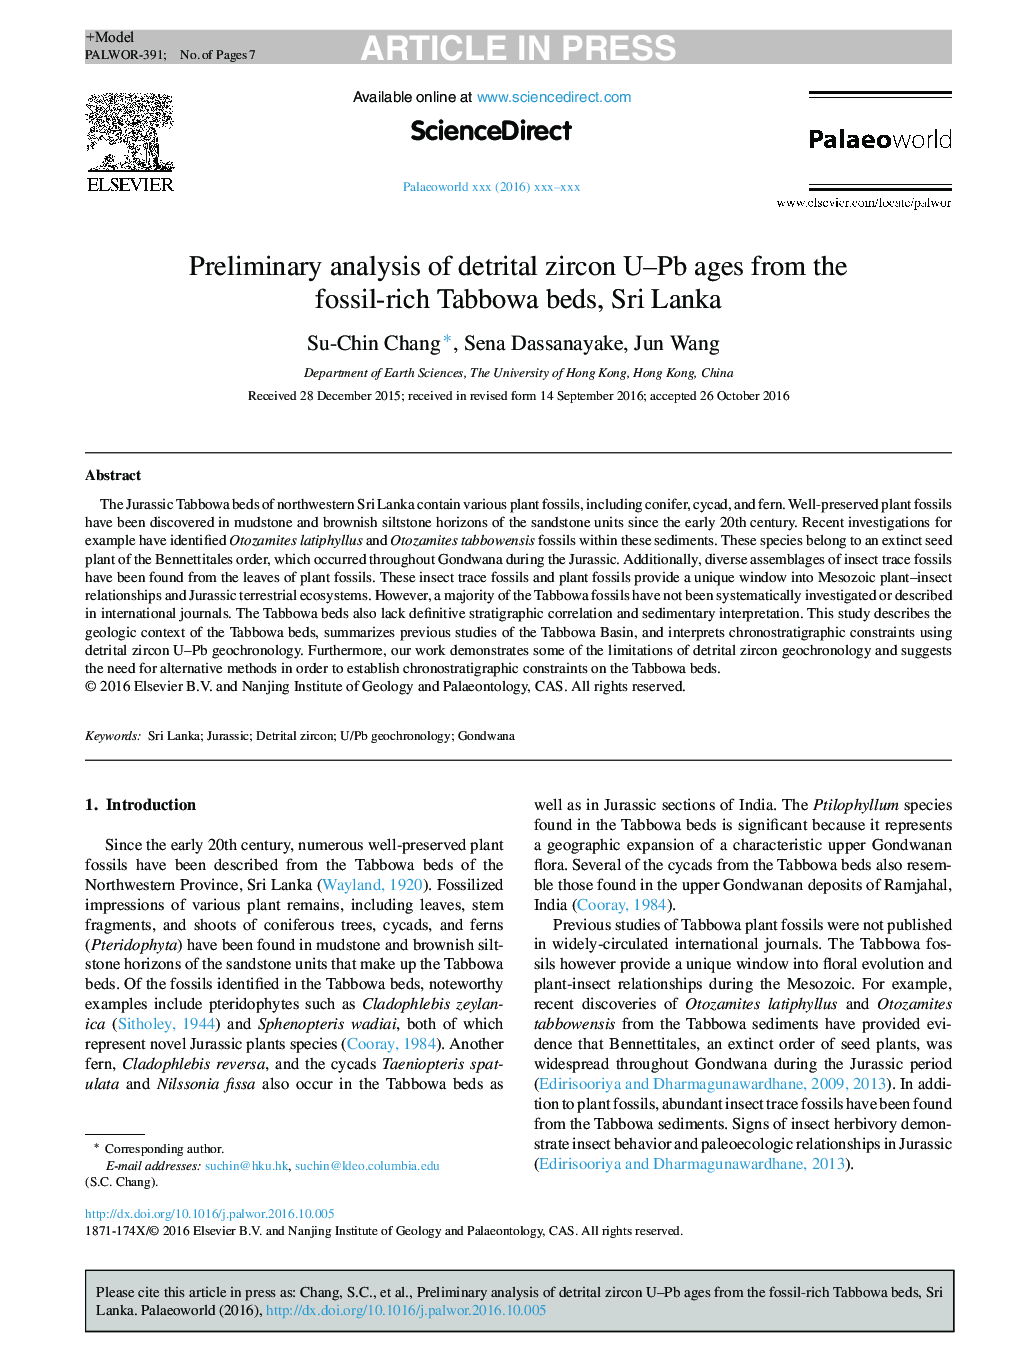 Preliminary analysis of detrital zircon U-Pb ages from the fossil-rich Tabbowa beds, Sri Lanka